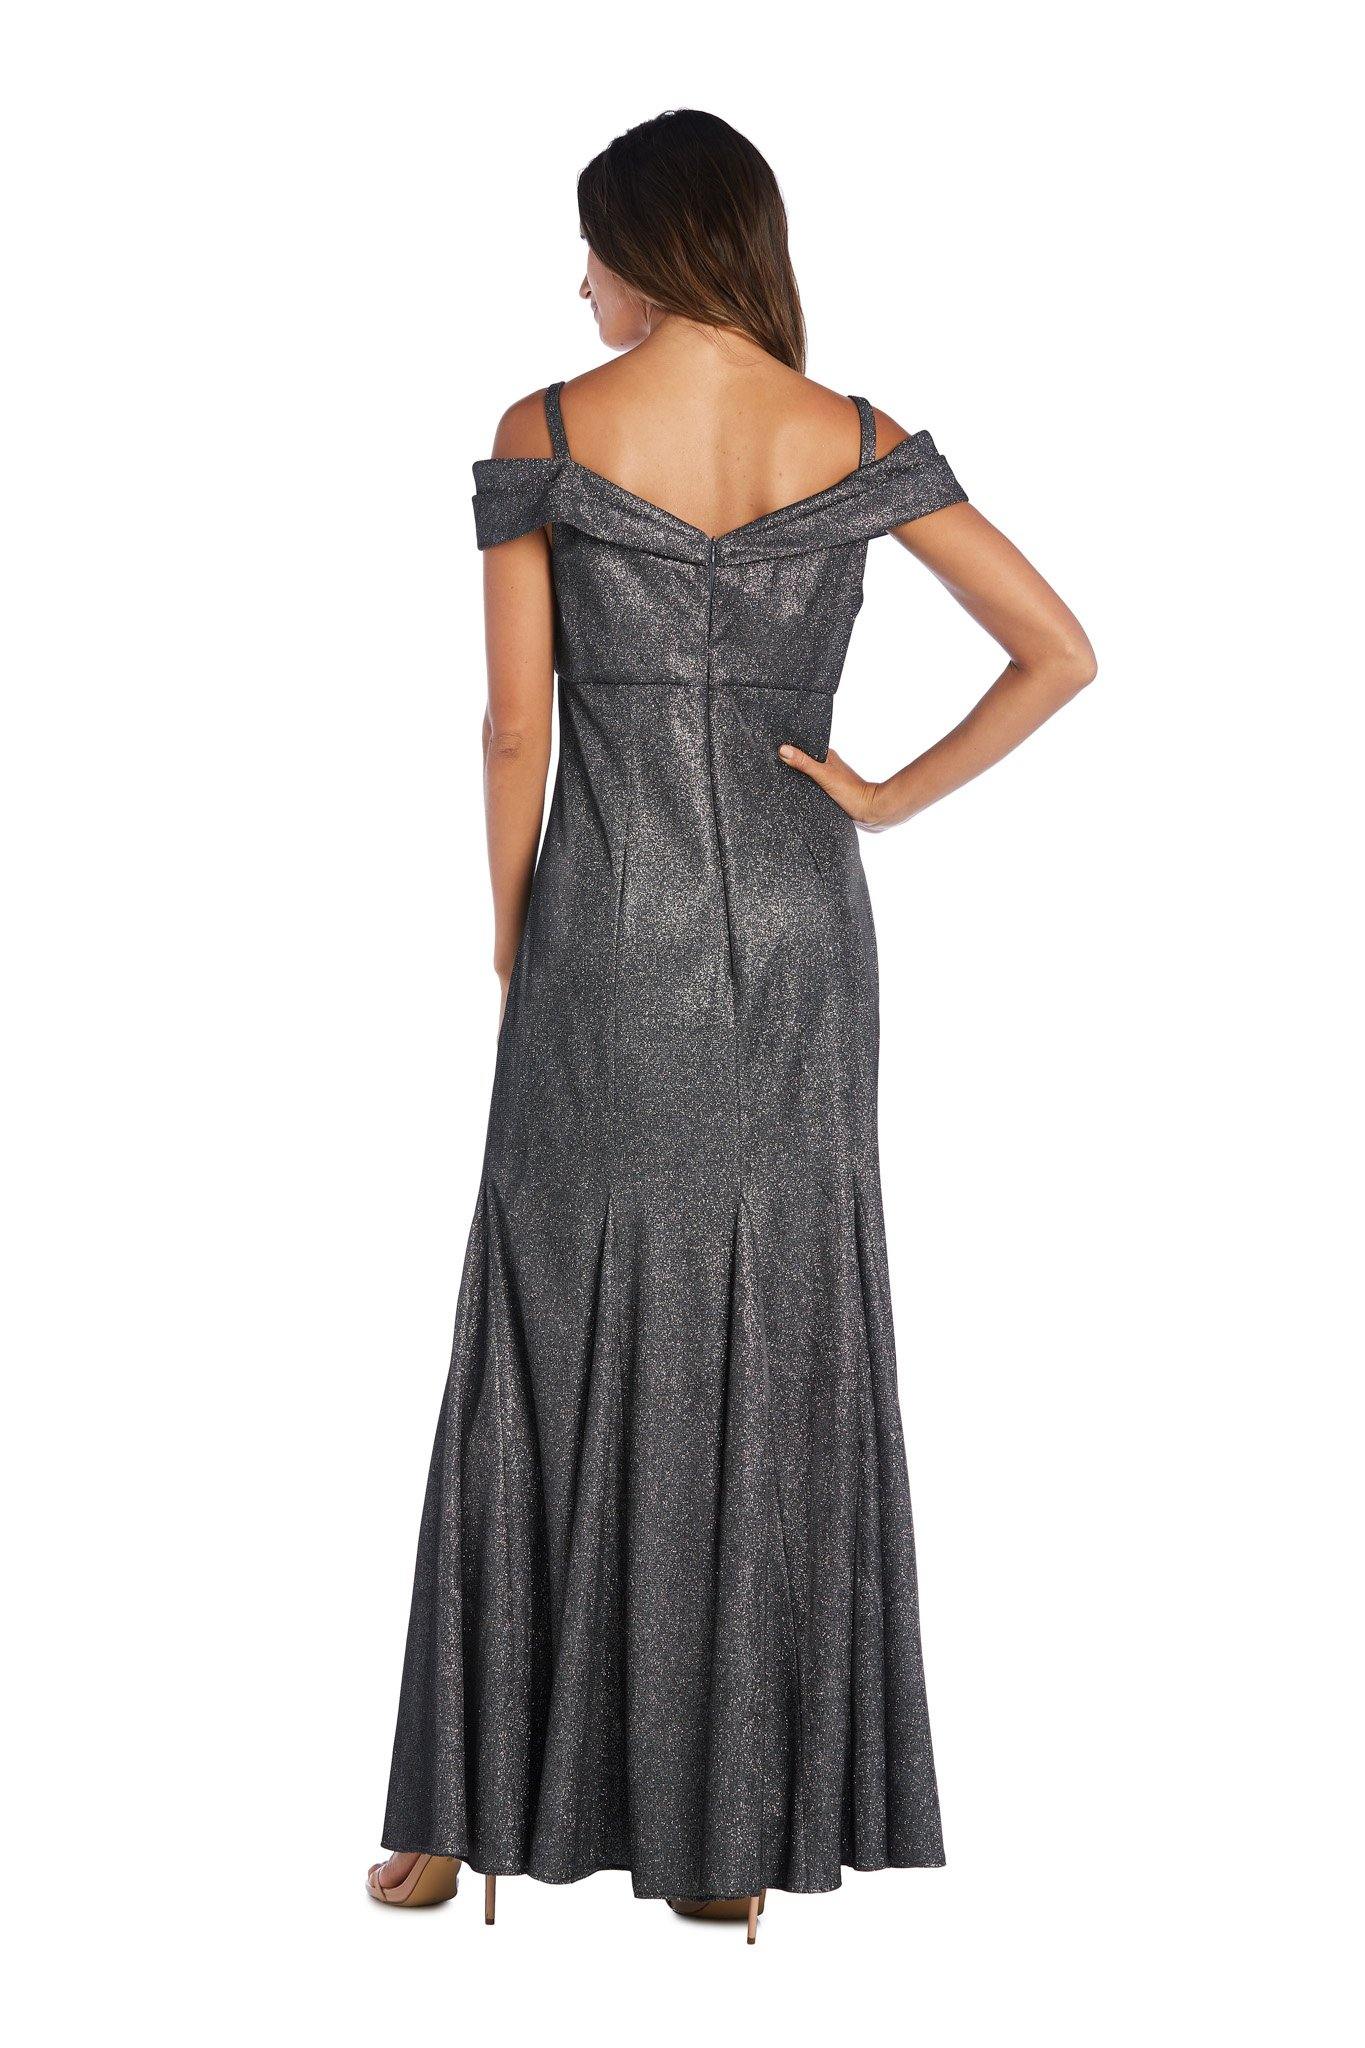 R&M Richards Evening Long Formal Metallic Dress 5759 - The Dress Outlet